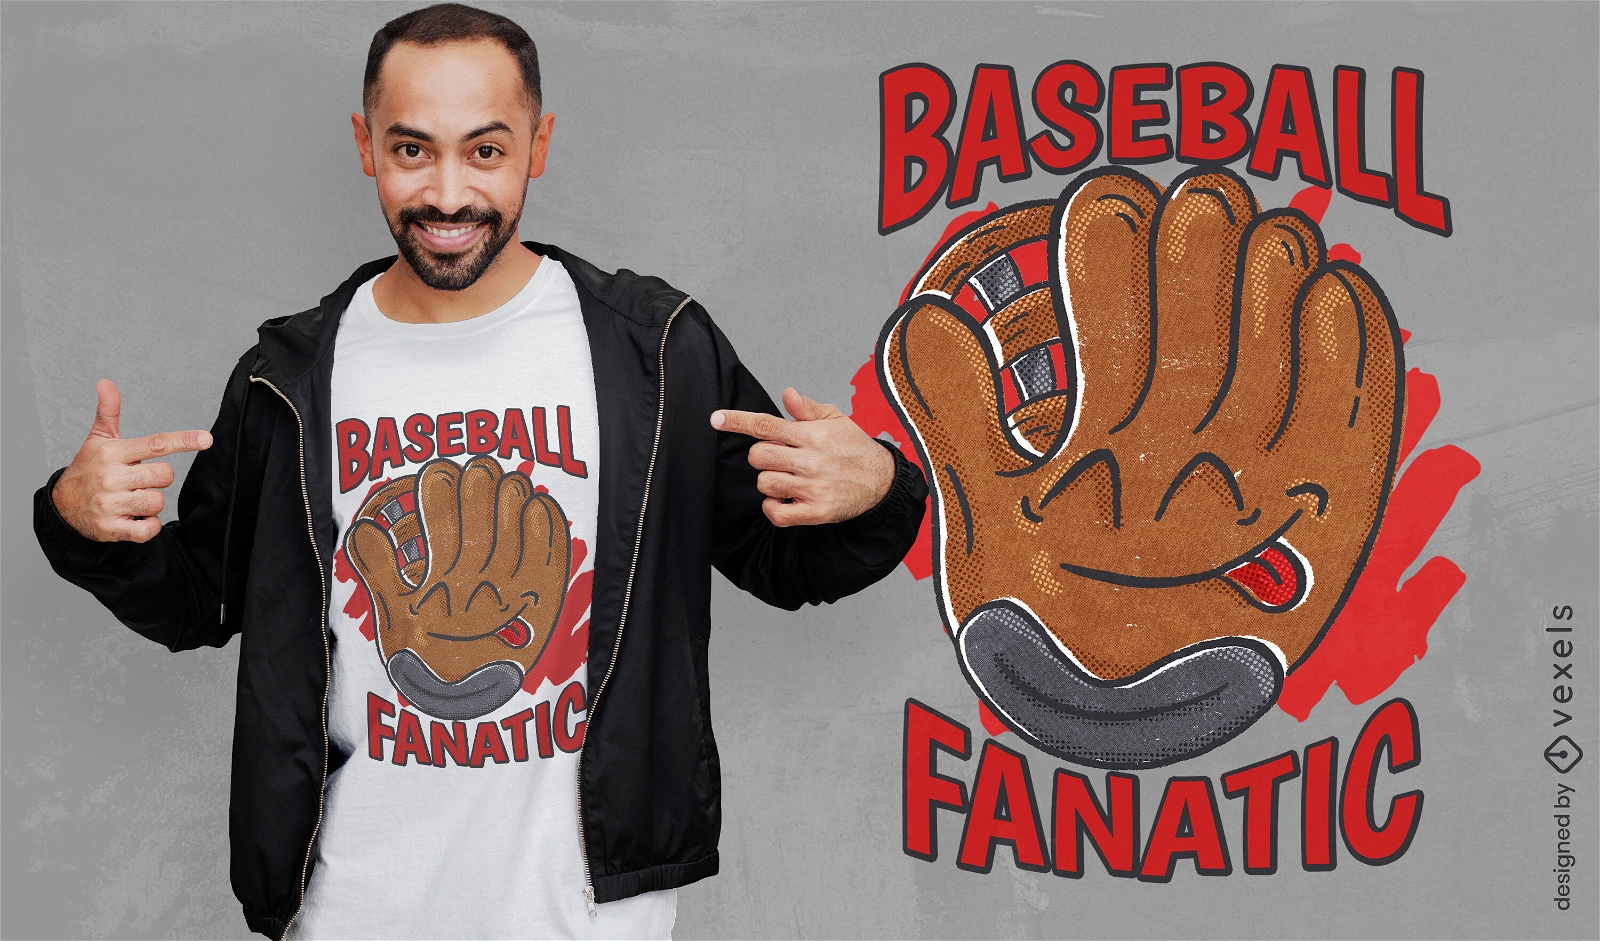 Diseño de camiseta de fanático de guantes de béisbol.